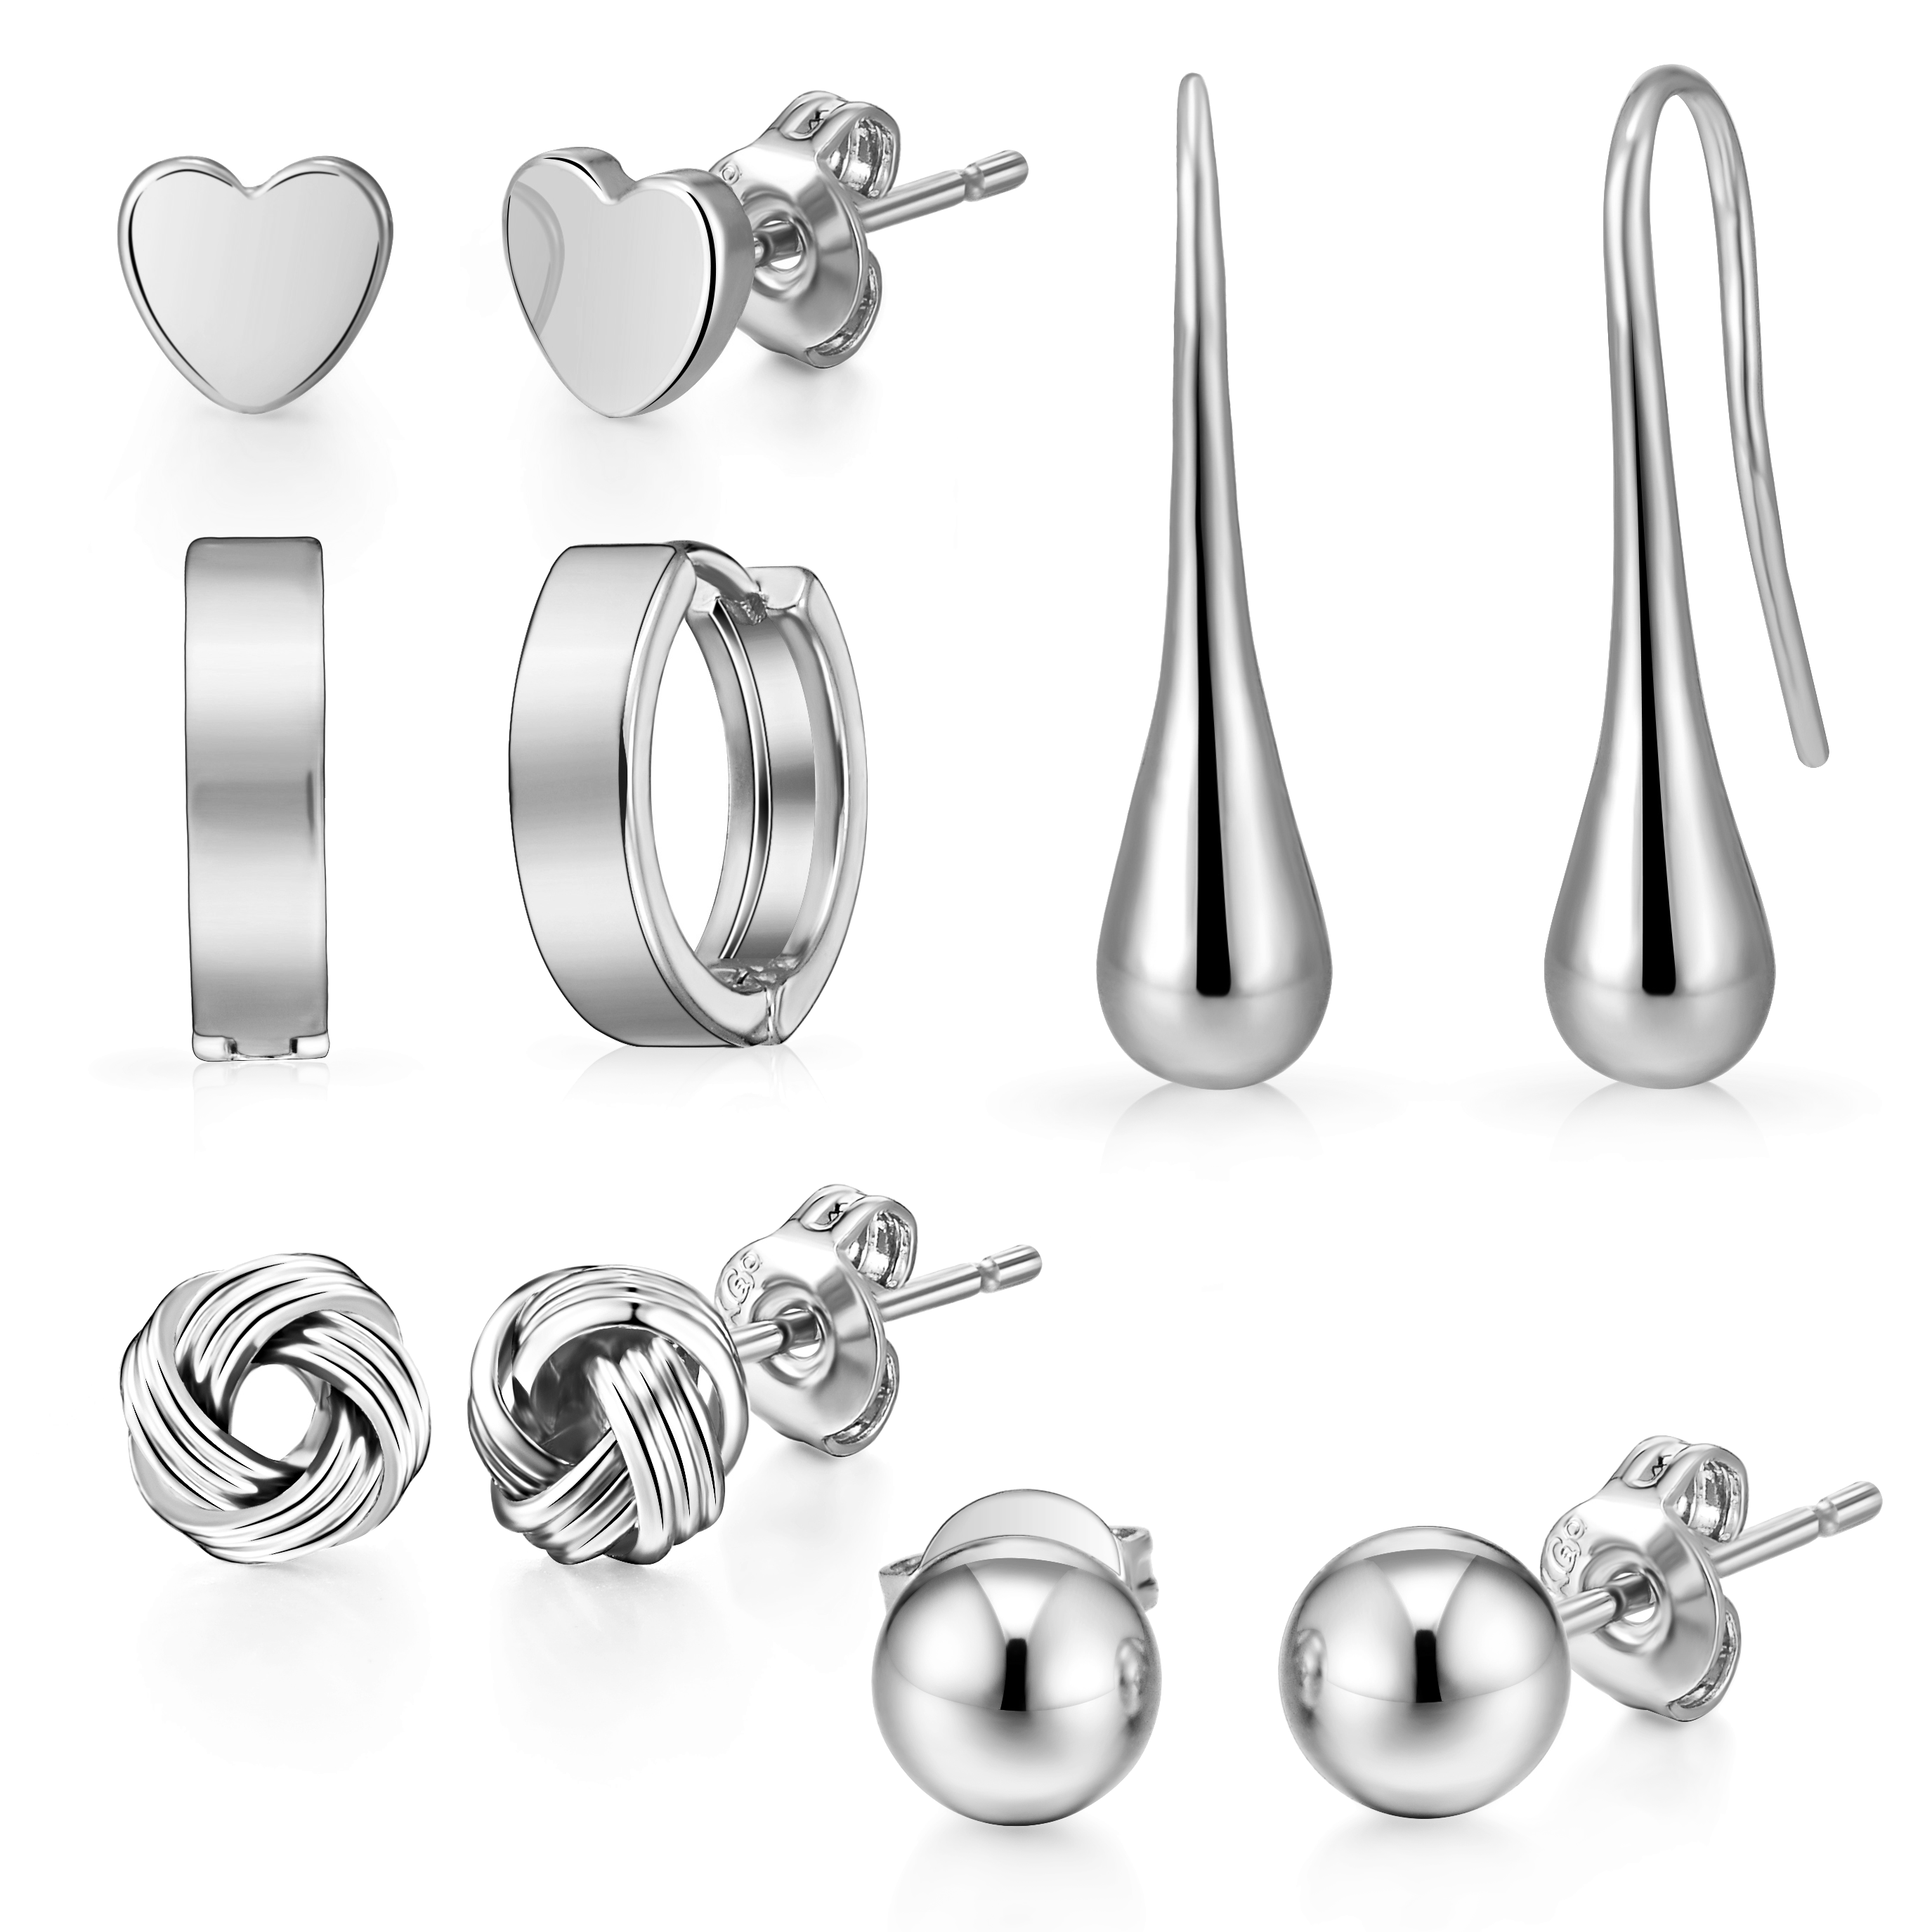 5 Pairs of Silver Plated Earrings by Philip Jones Jewellery